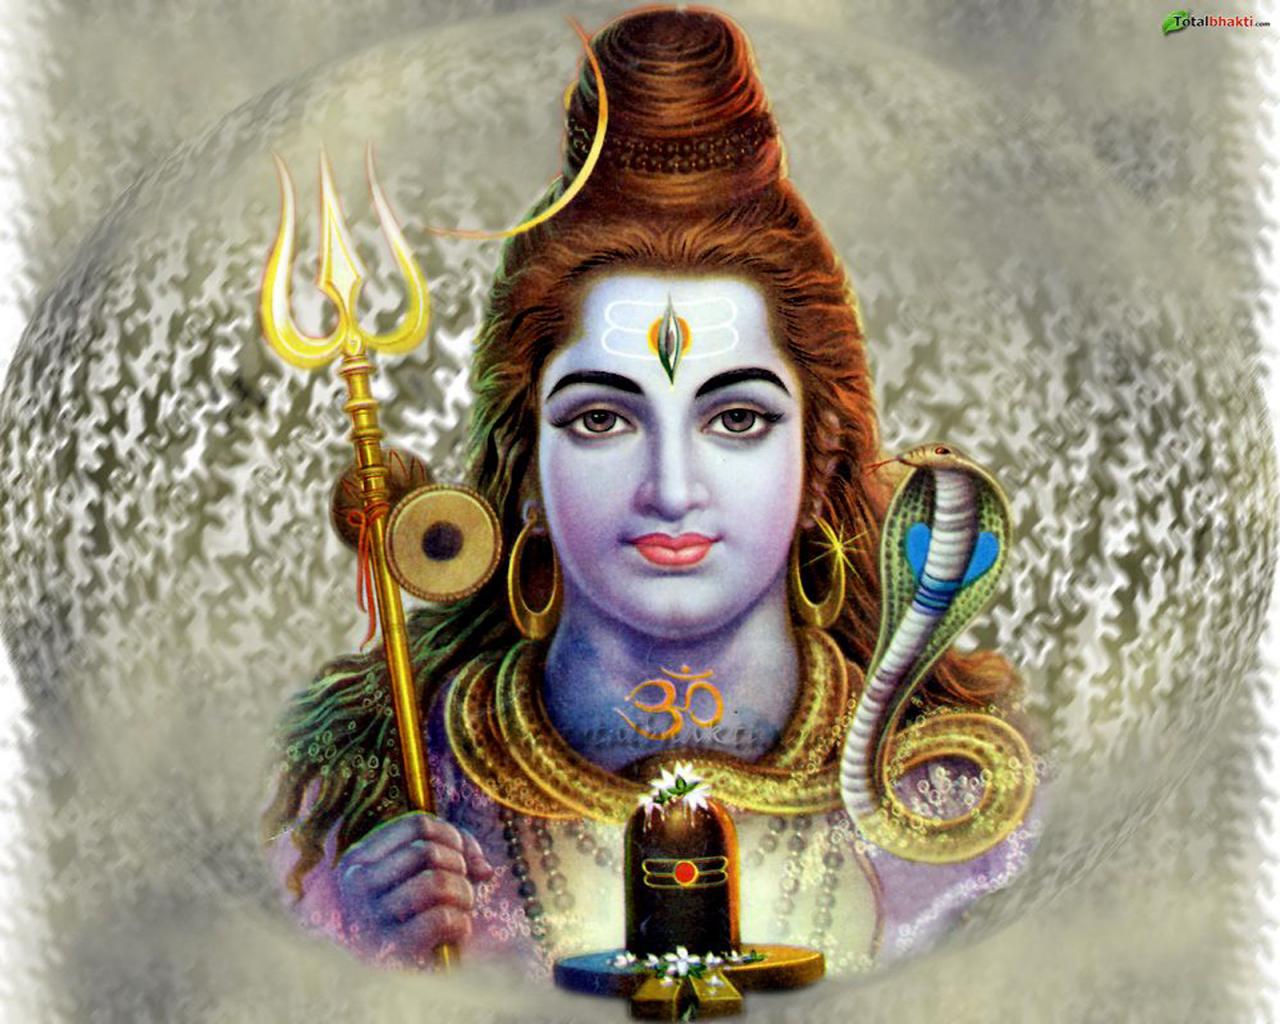 https://blogger.googleusercontent.com/img/b/R29vZ2xl/AVvXsEiu5cYecRcQa9wj2NxnSeZagcDp6pCtXlpA0Xxnn2QEFIjo9QuxzJmxYlbgqhqO4wwK6QcRtyXAPXrbNZxR9Y1ic8qB1Ky8sdSEAJMM56Y7fYqPTWw92OBASBfNT4rxYHo1NurtXhOT34E/s1600/Lord-Shiva-Art-Pictures-HD-6.jpg